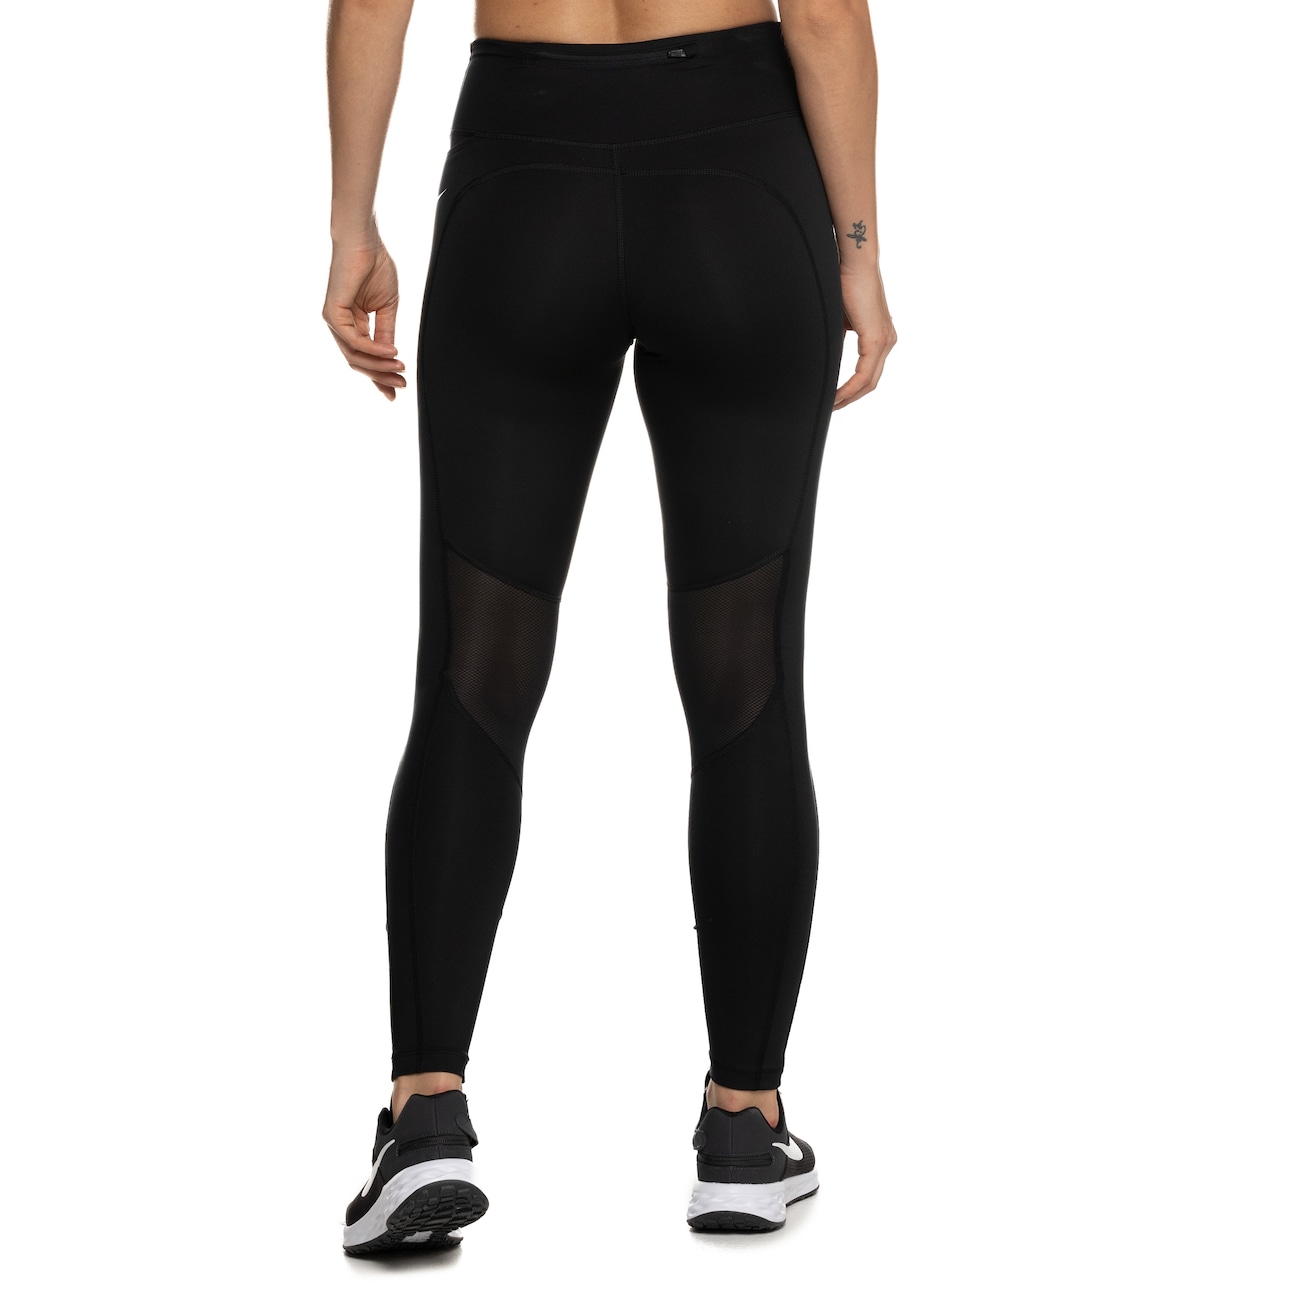 Nike Running Fast Tight leggings in black